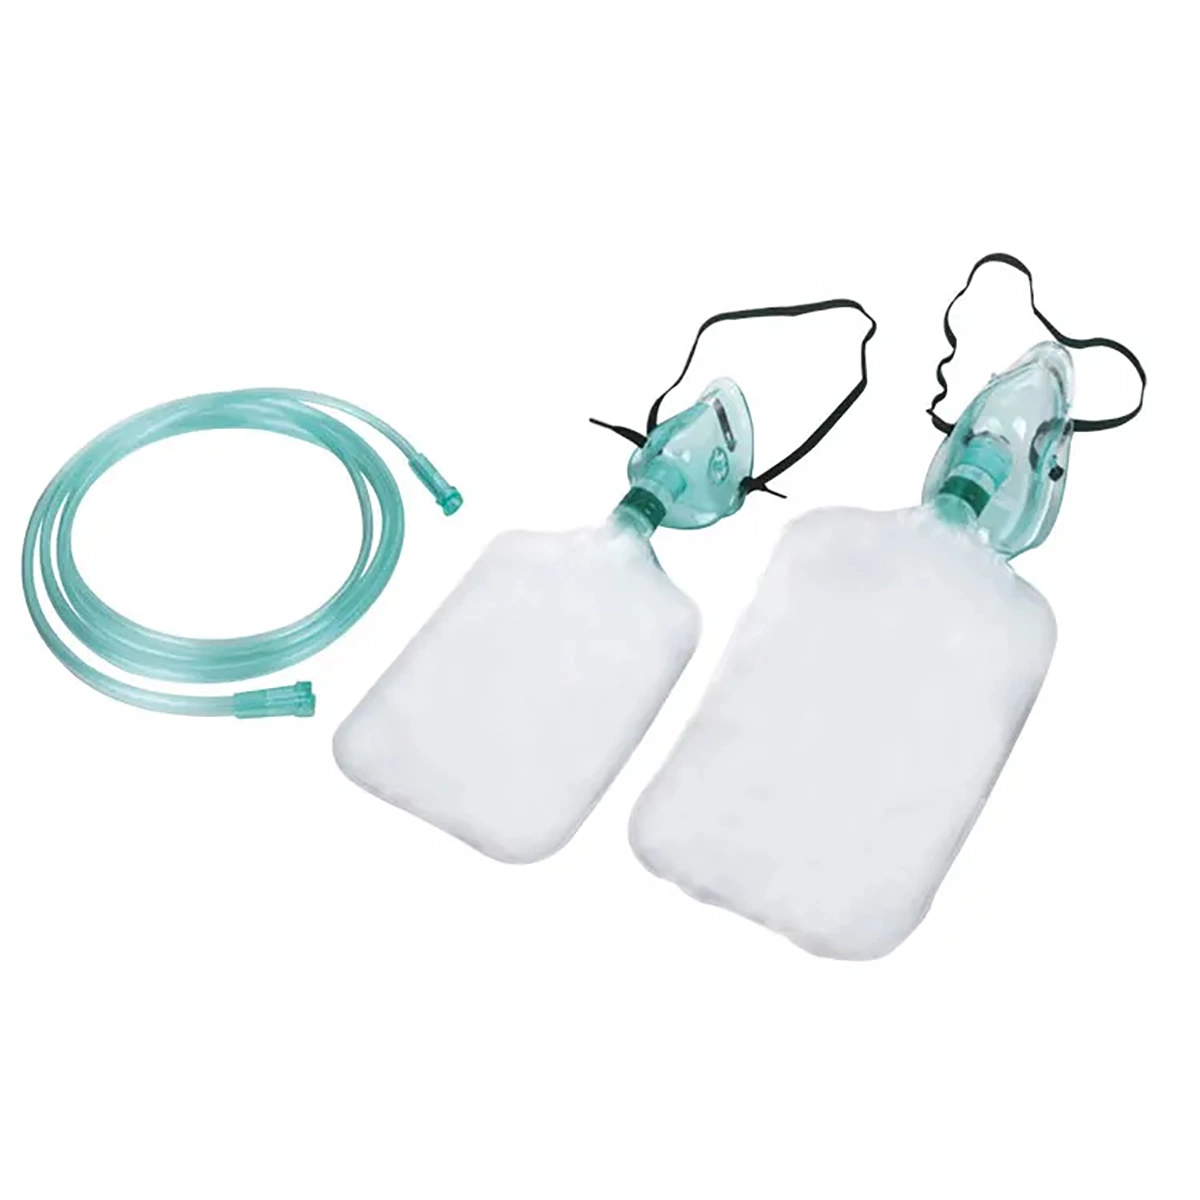 Disposable Medical PVC Non-Rebreather Oxygen Face Mask with Reservoir Bag